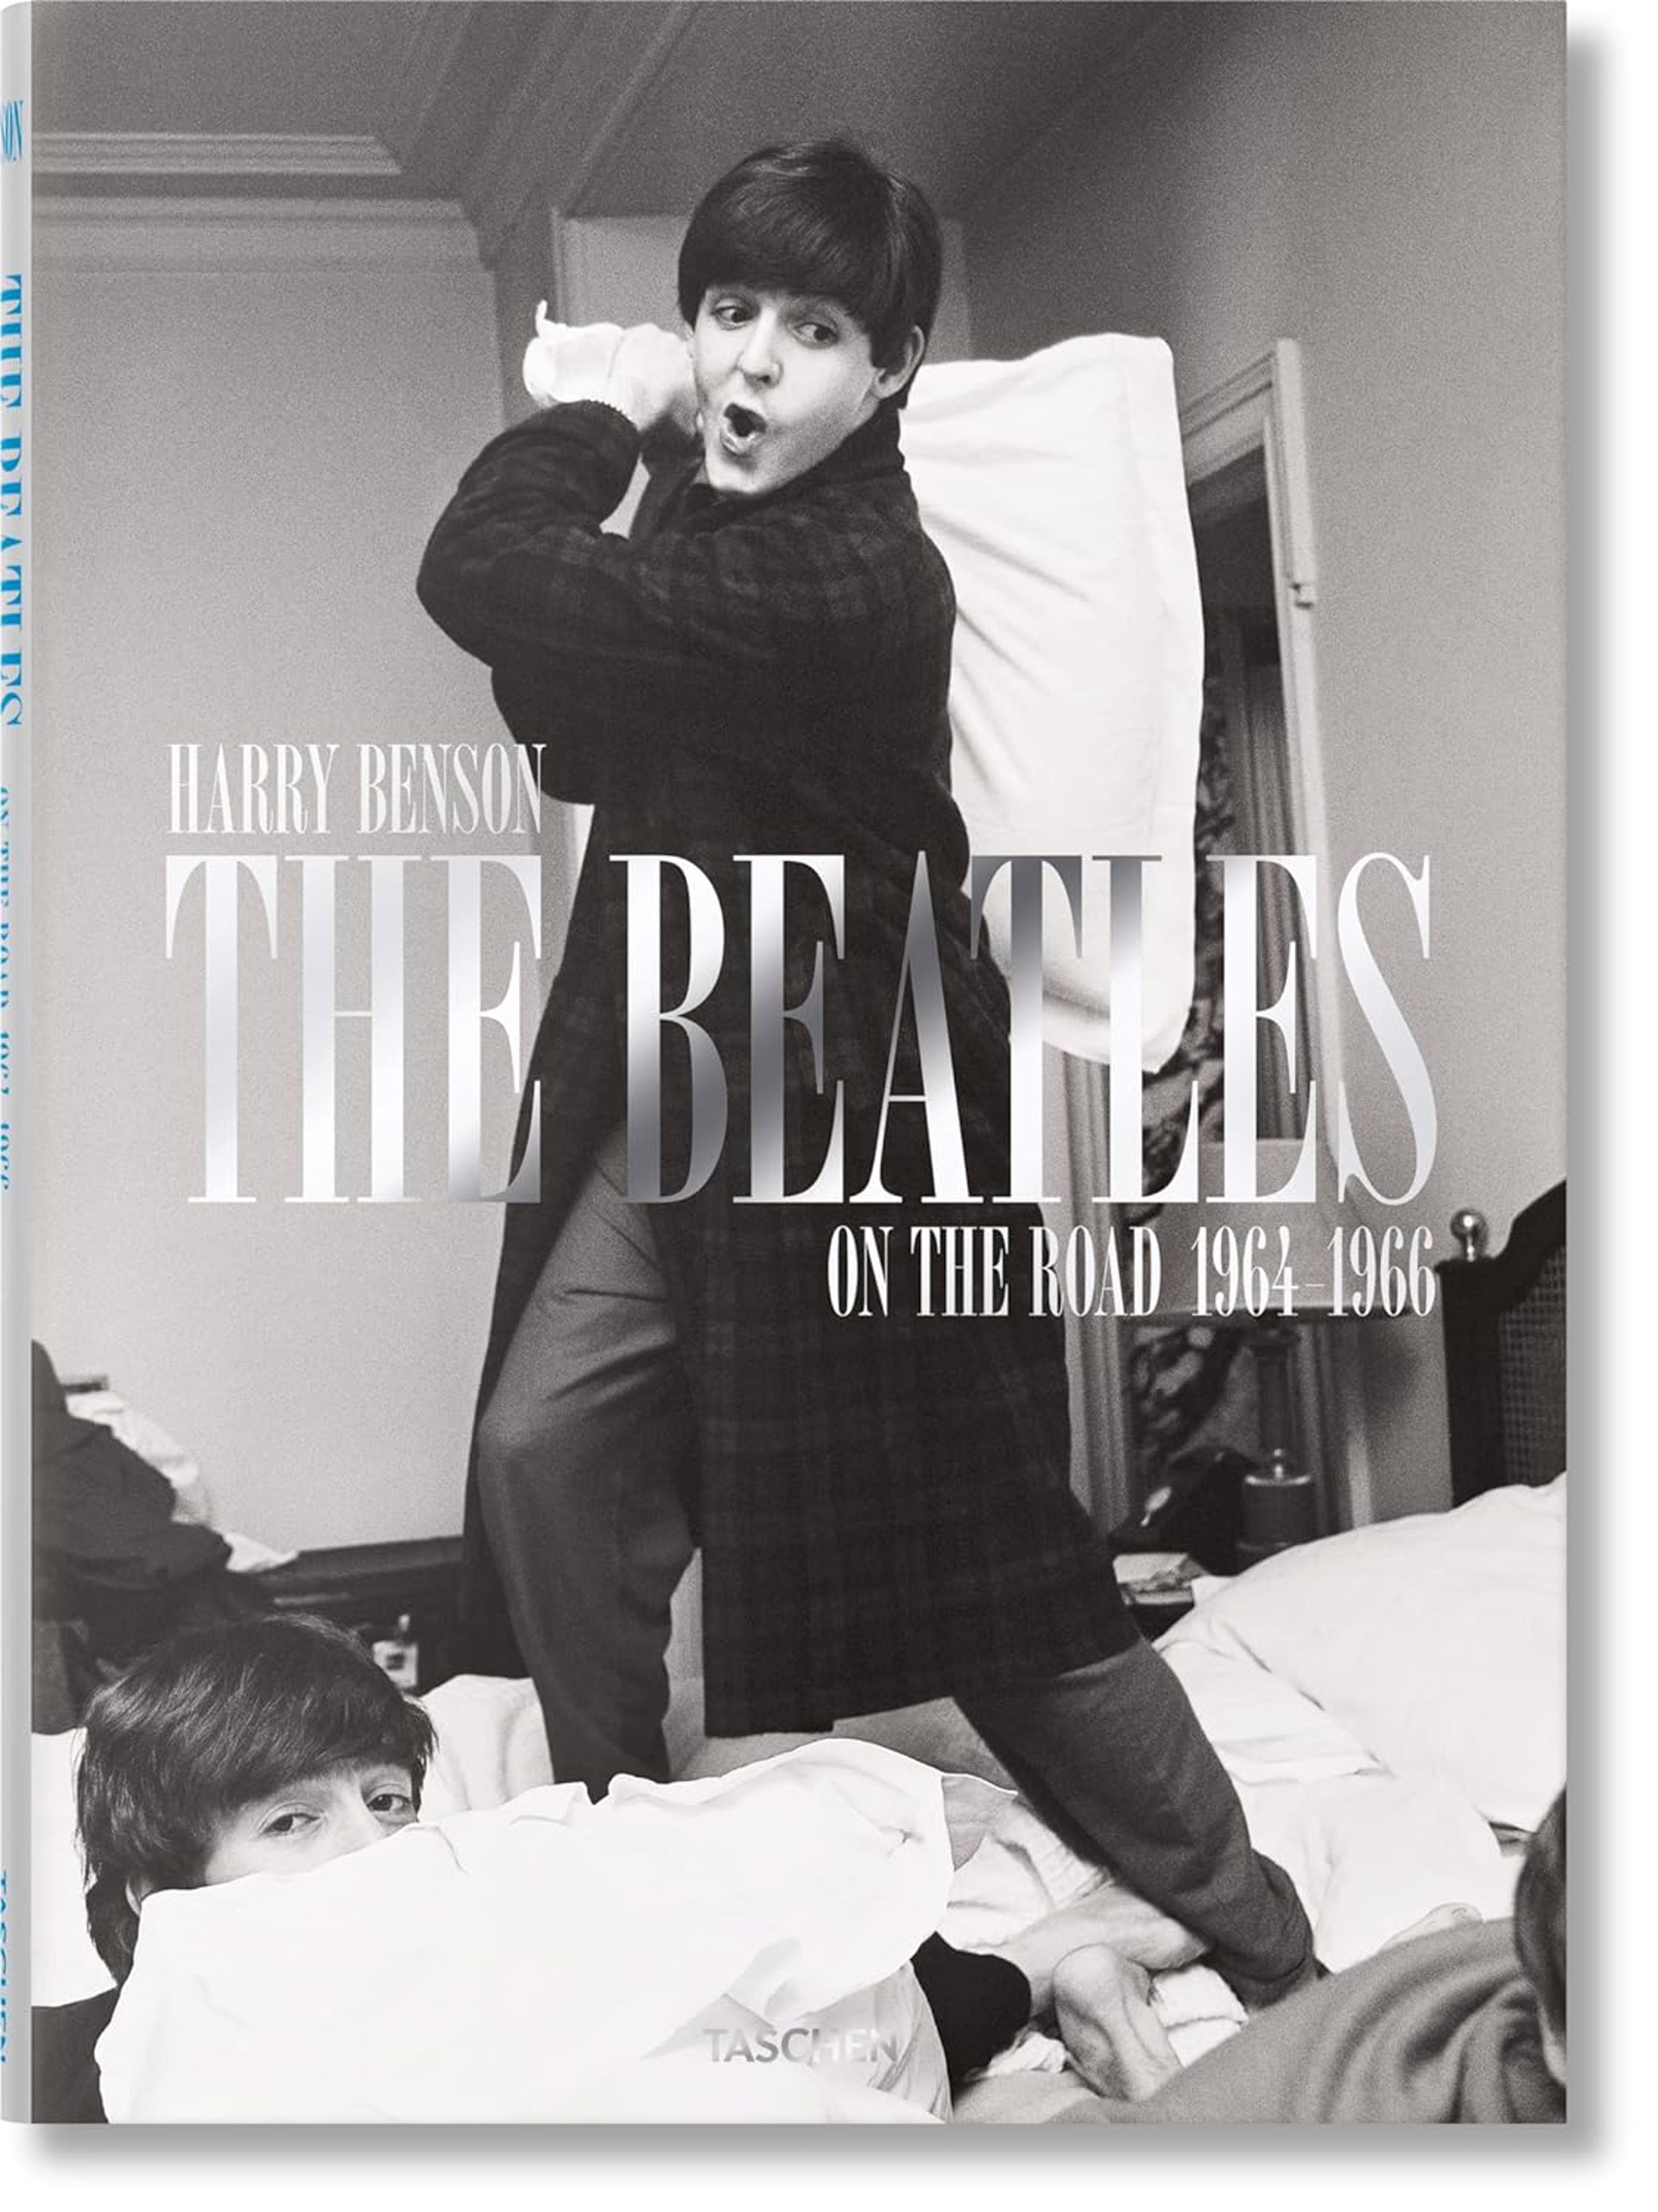 The Beatles | Harry Benson by Taschen